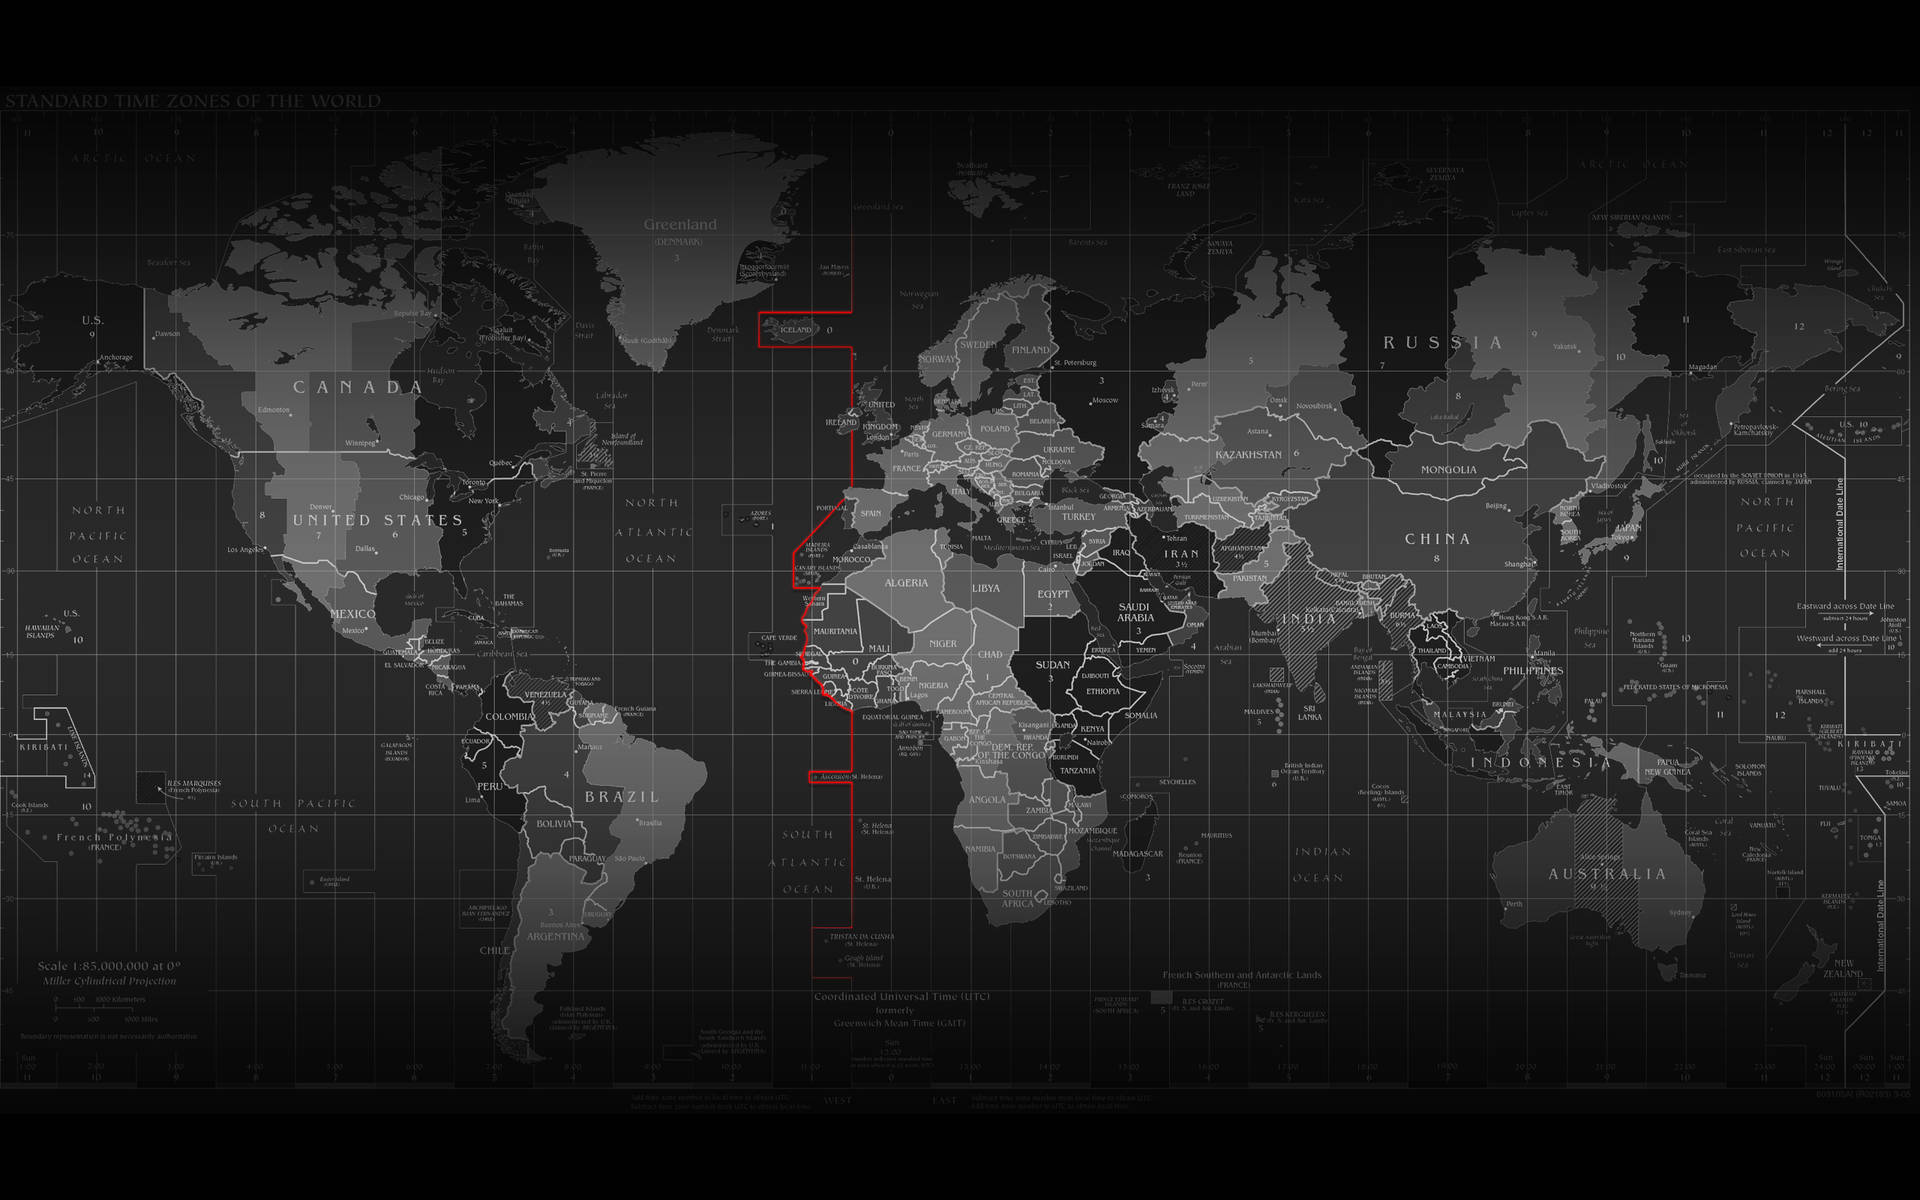 Monochrome World Map Time Zones Wallpaper